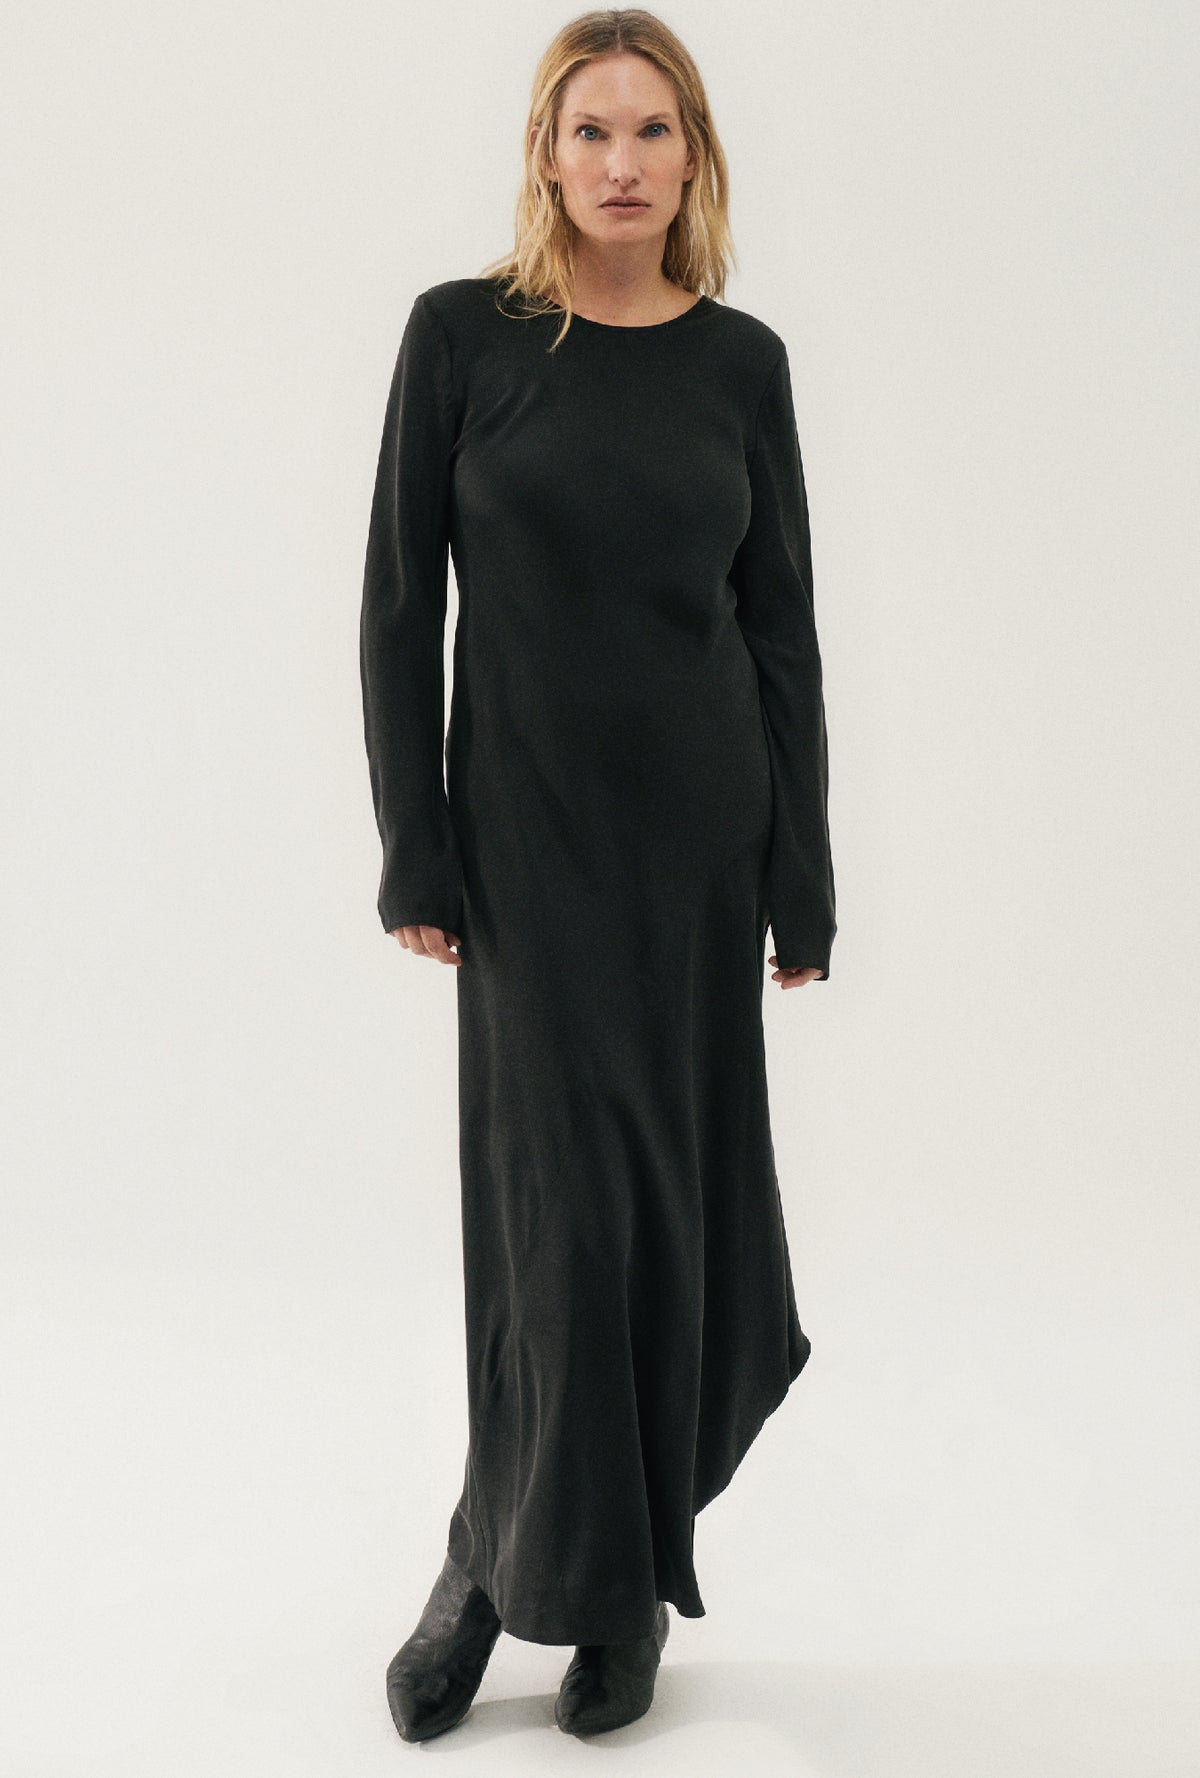 Silk Laundry | Full Sleeve Bias Cut Dress - Black